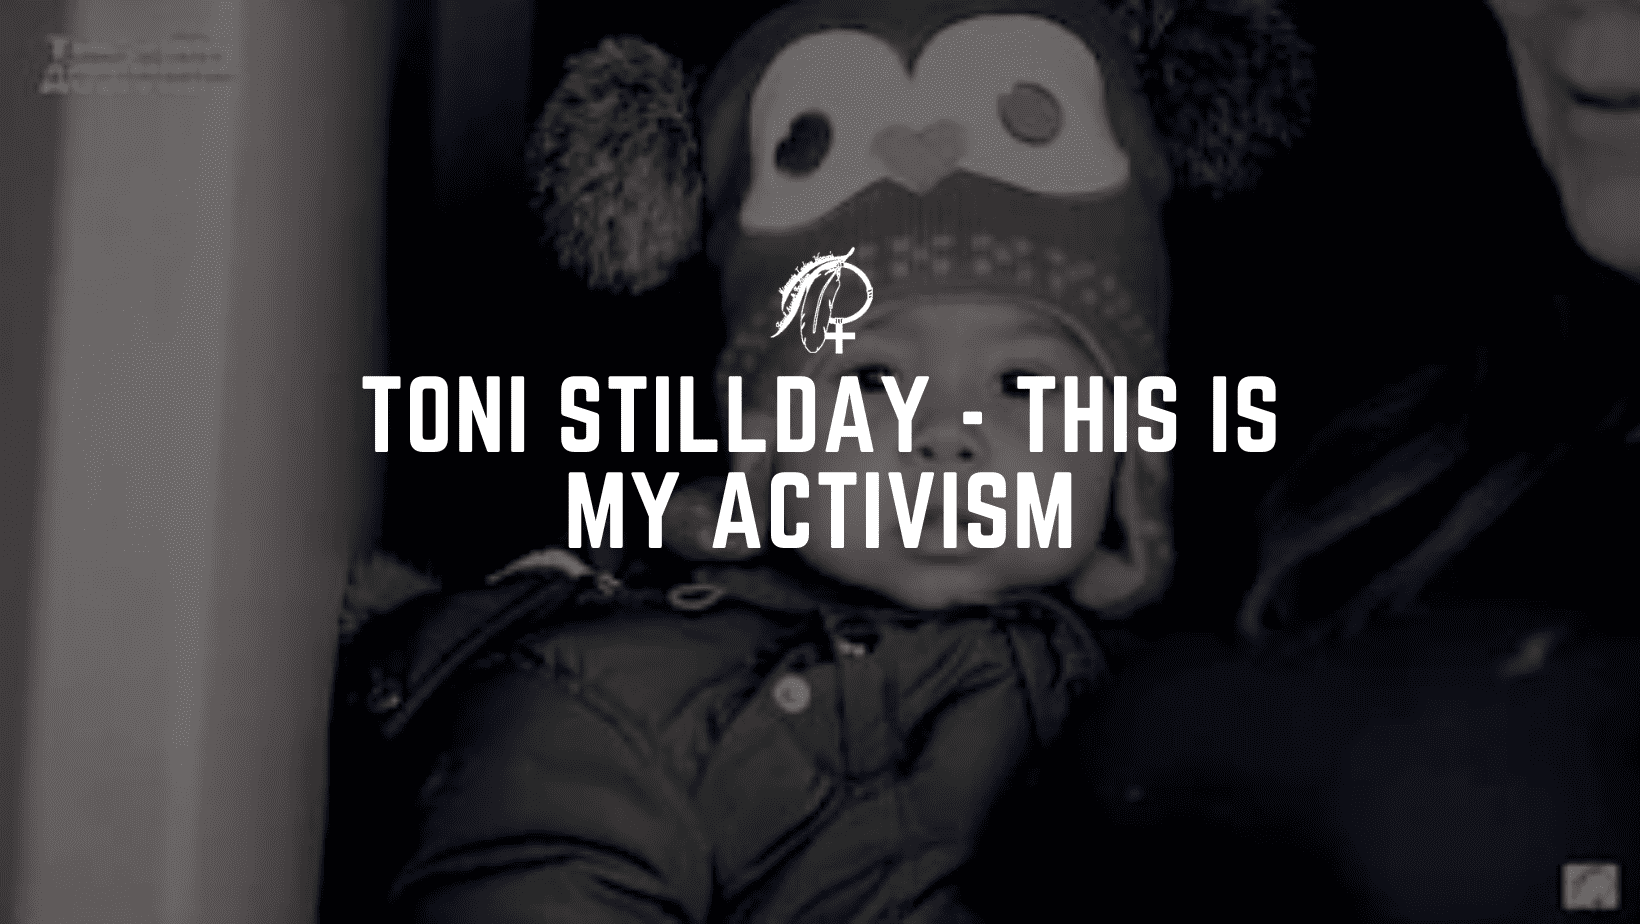 Toni Stillday - This is My Activism